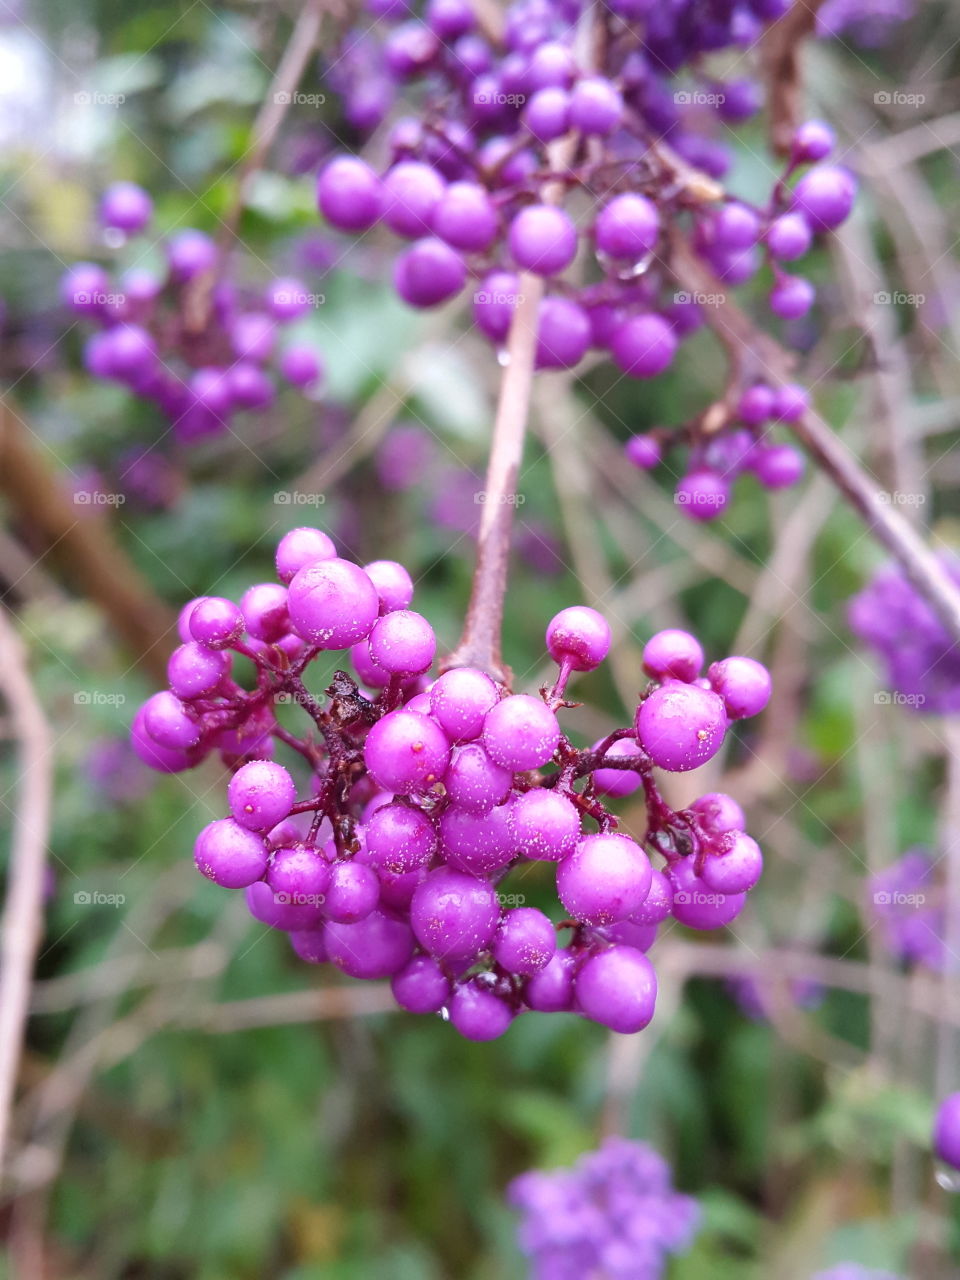 Close-up of purple berries on tree